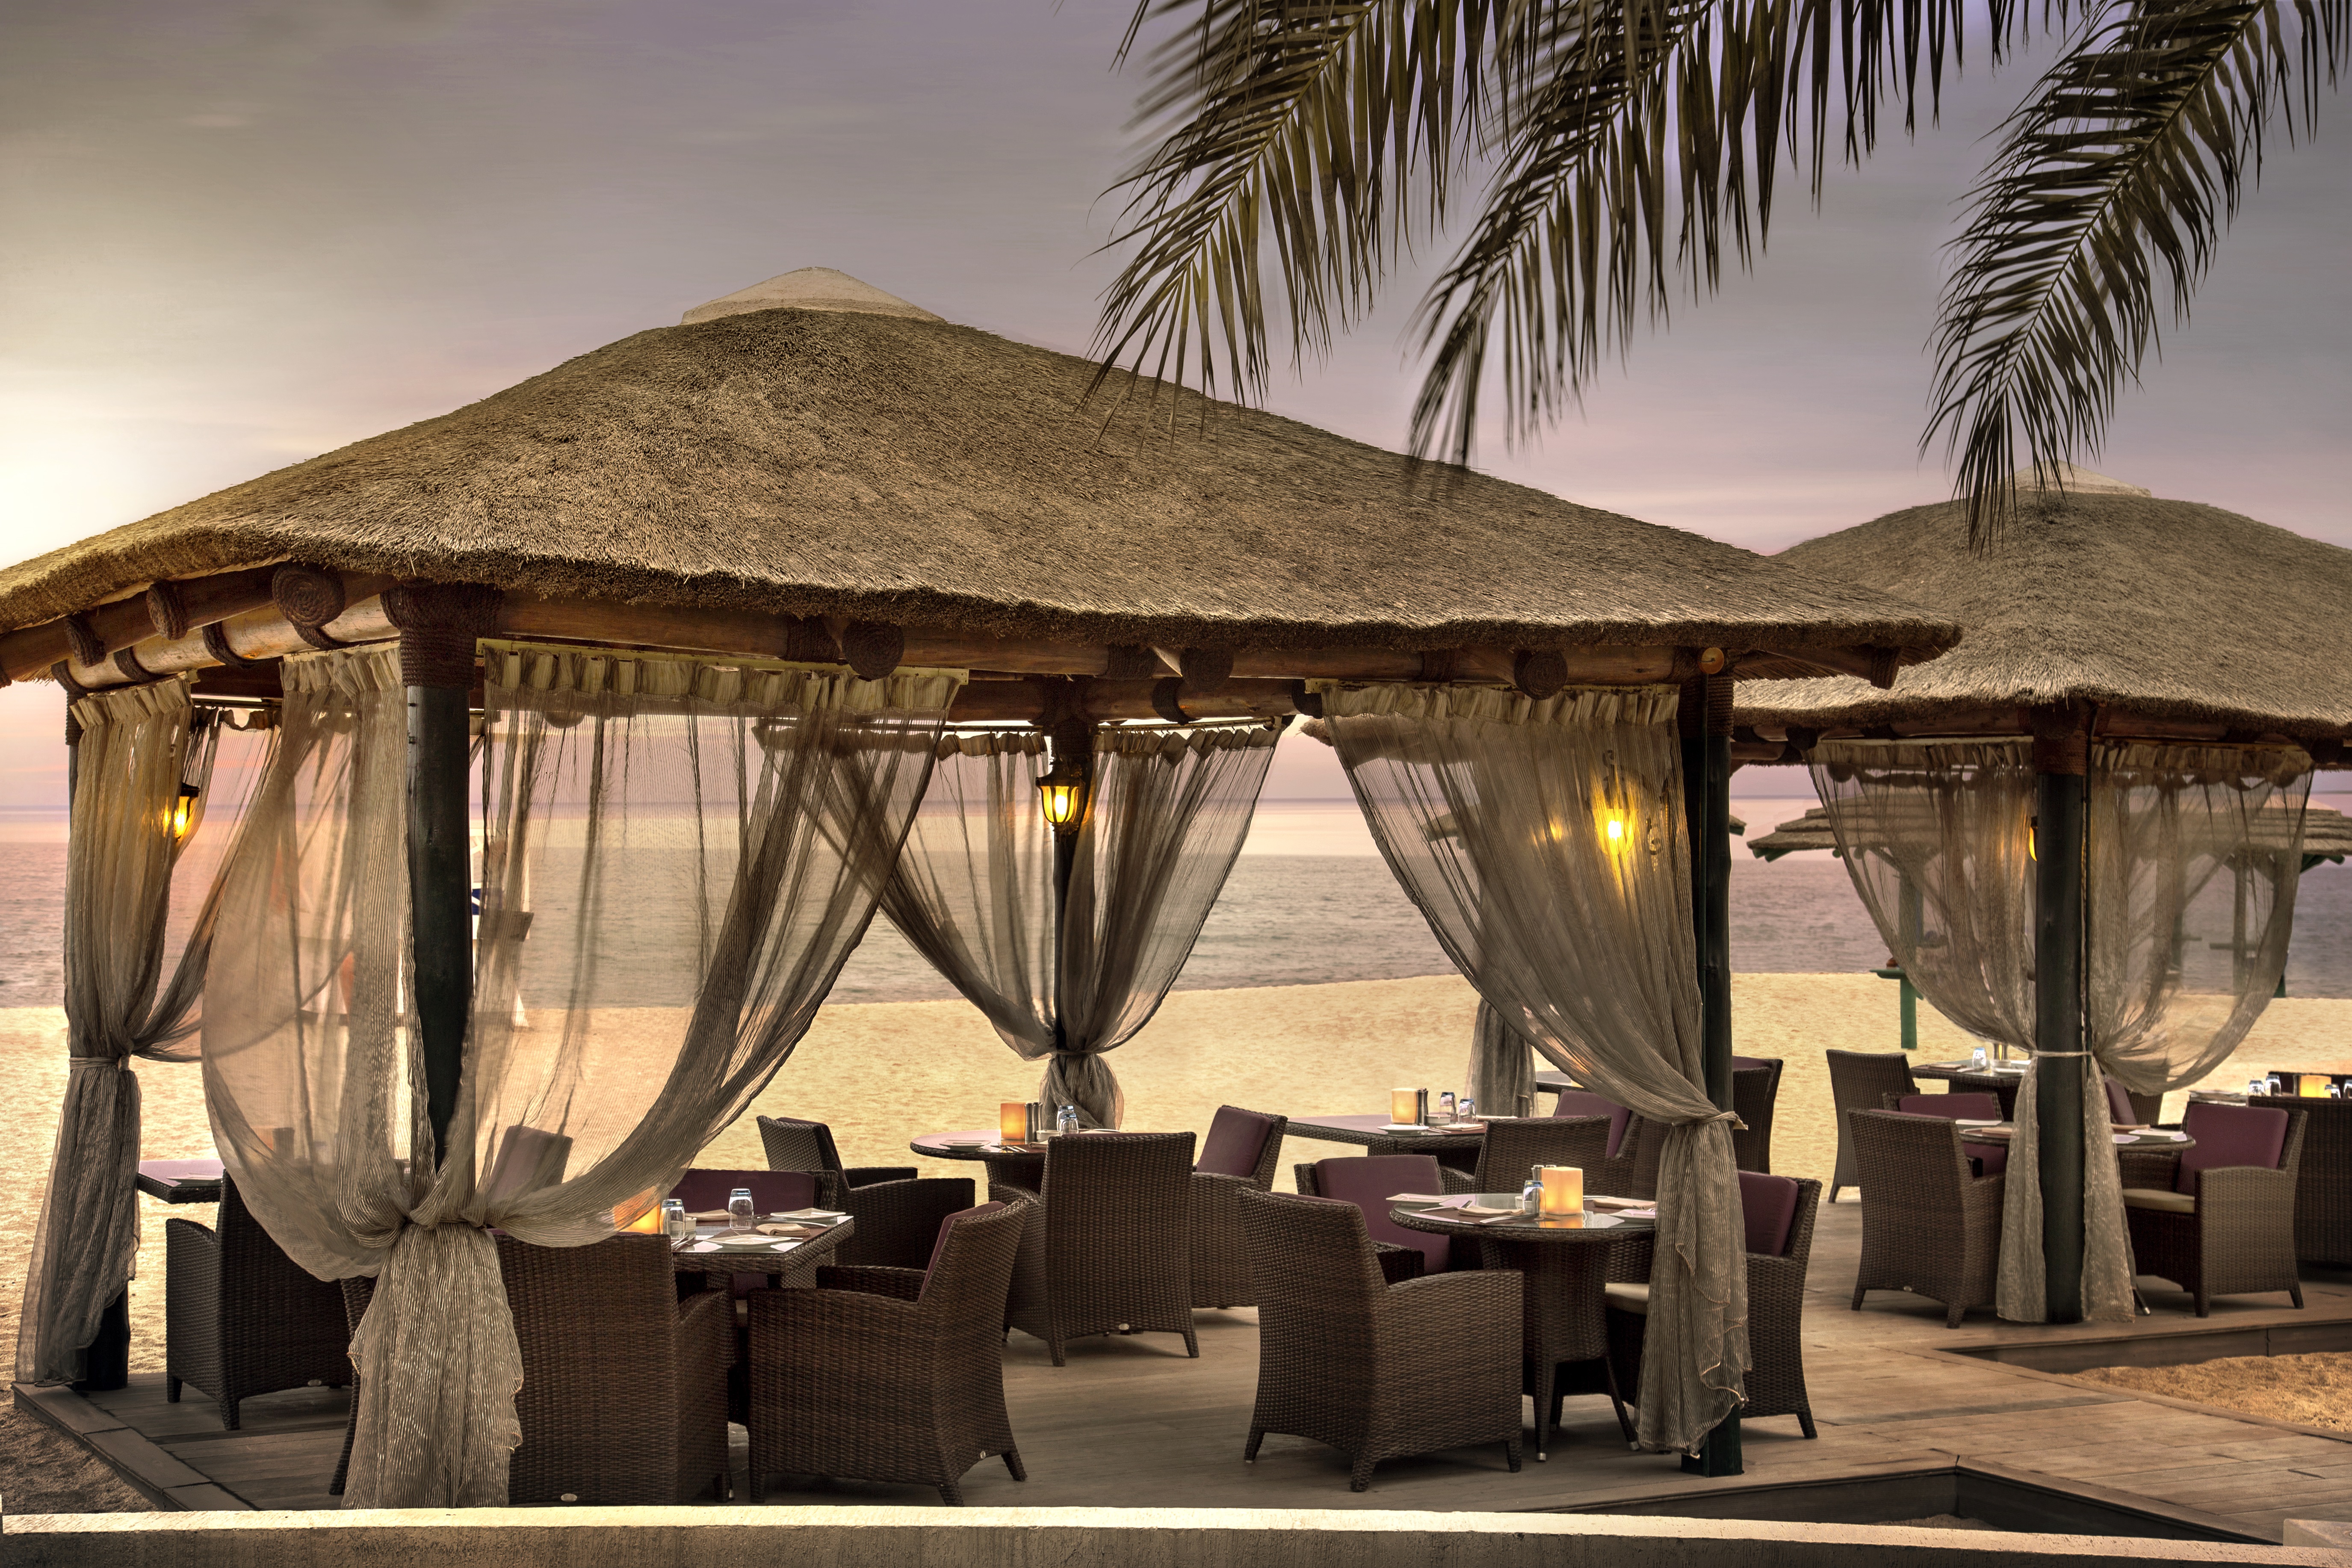 Fujairah Rotana Resort & Spa - Al-Fujairah, United Arab Emirates